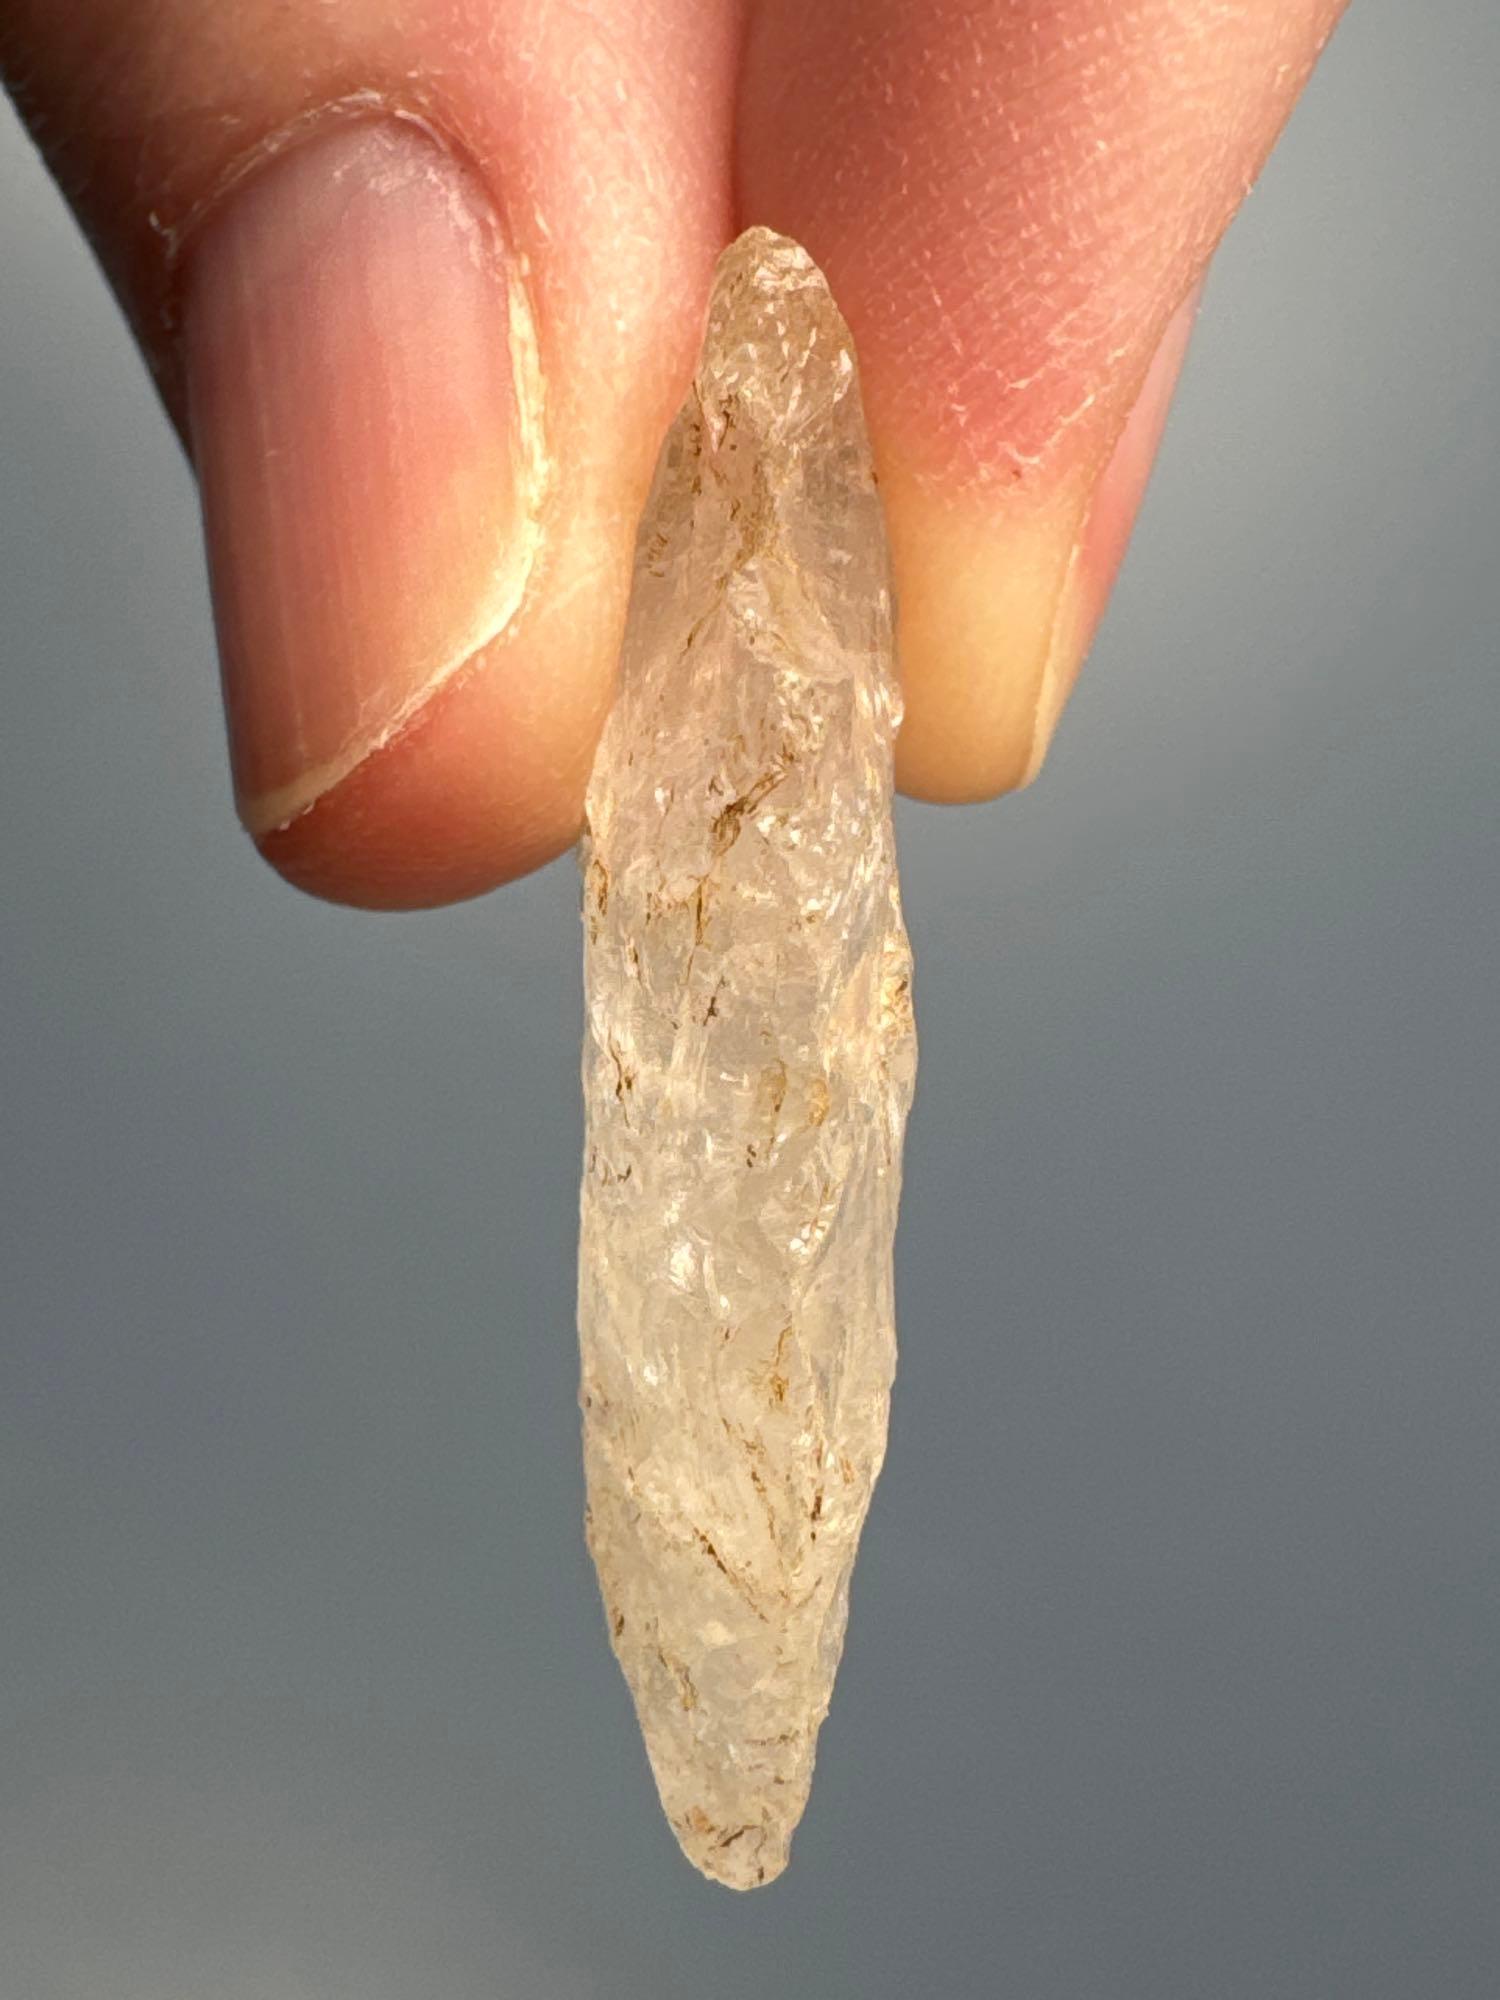 RARE 1 3/16" Crystal Quartz Point, Well-Made, Found in North Carolina